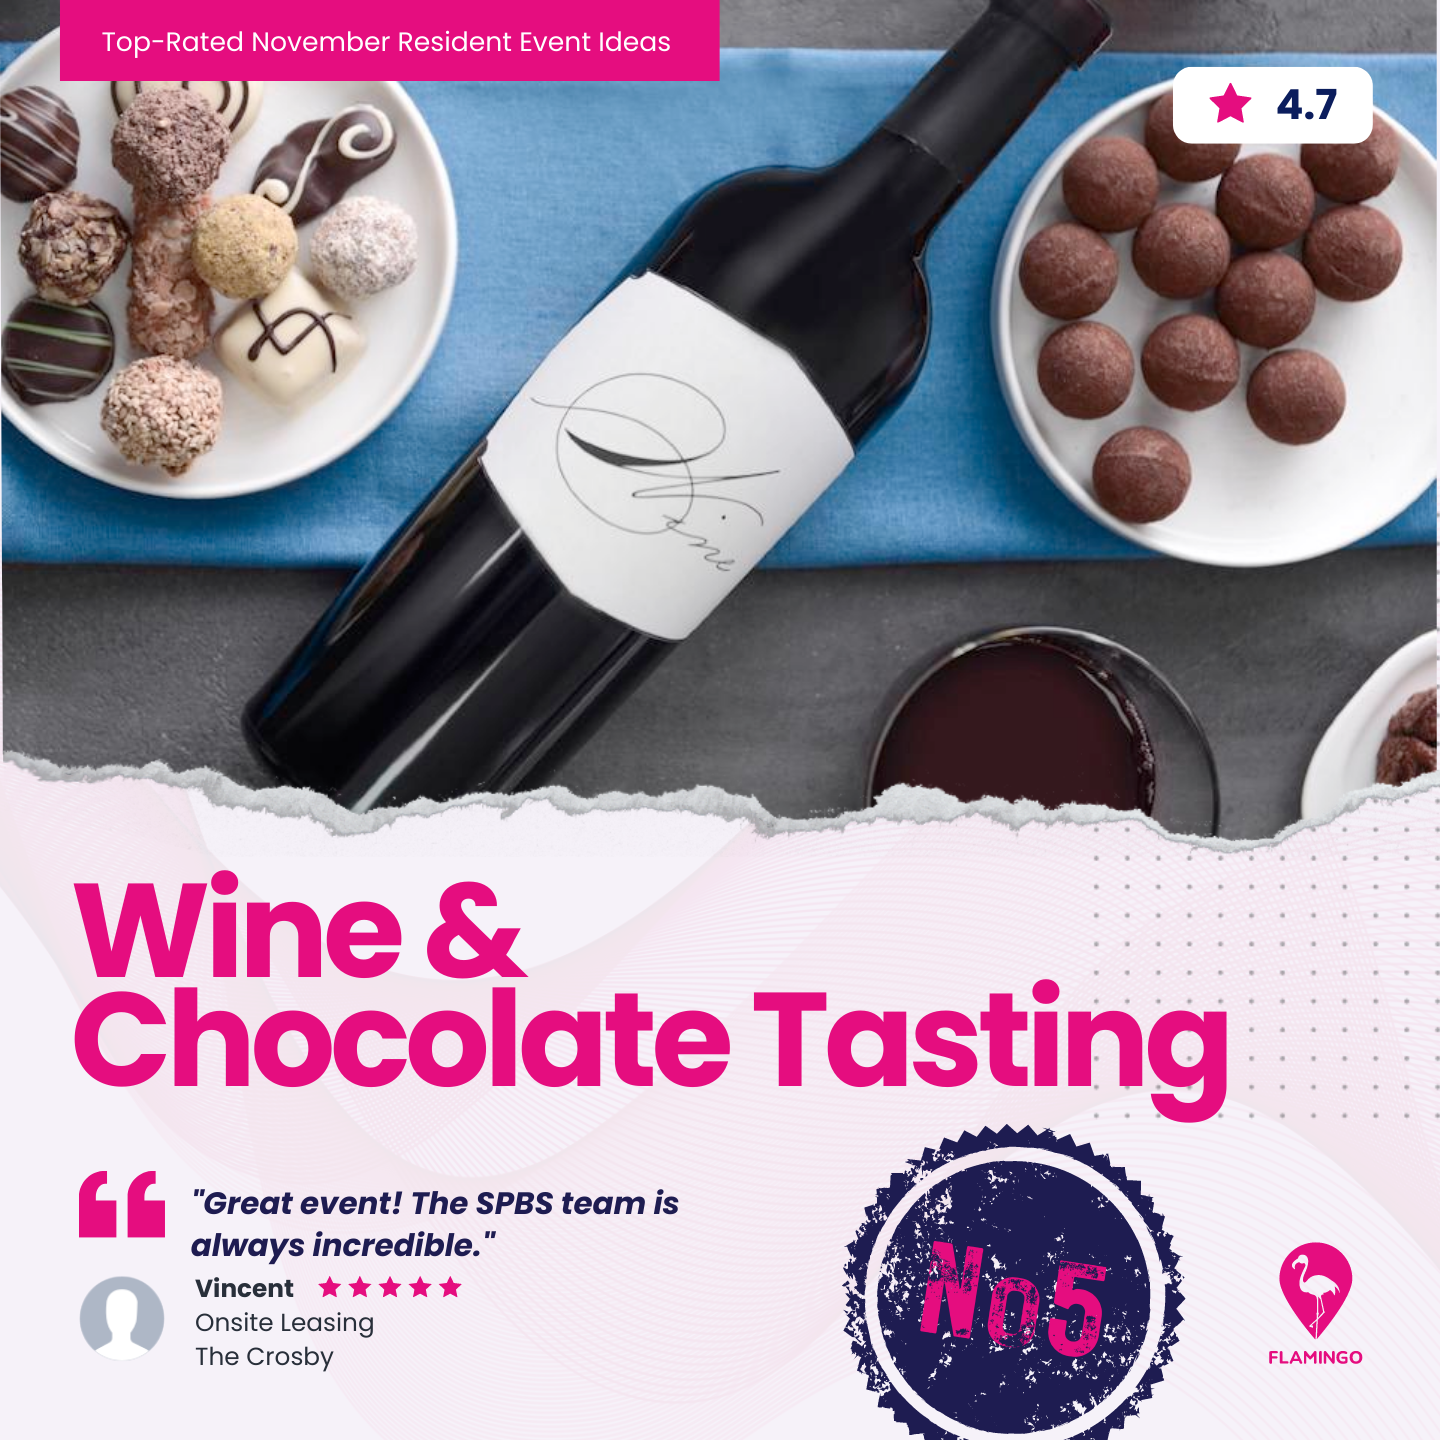 Wine & Chocolate Tasting | November Resident Event Ideas